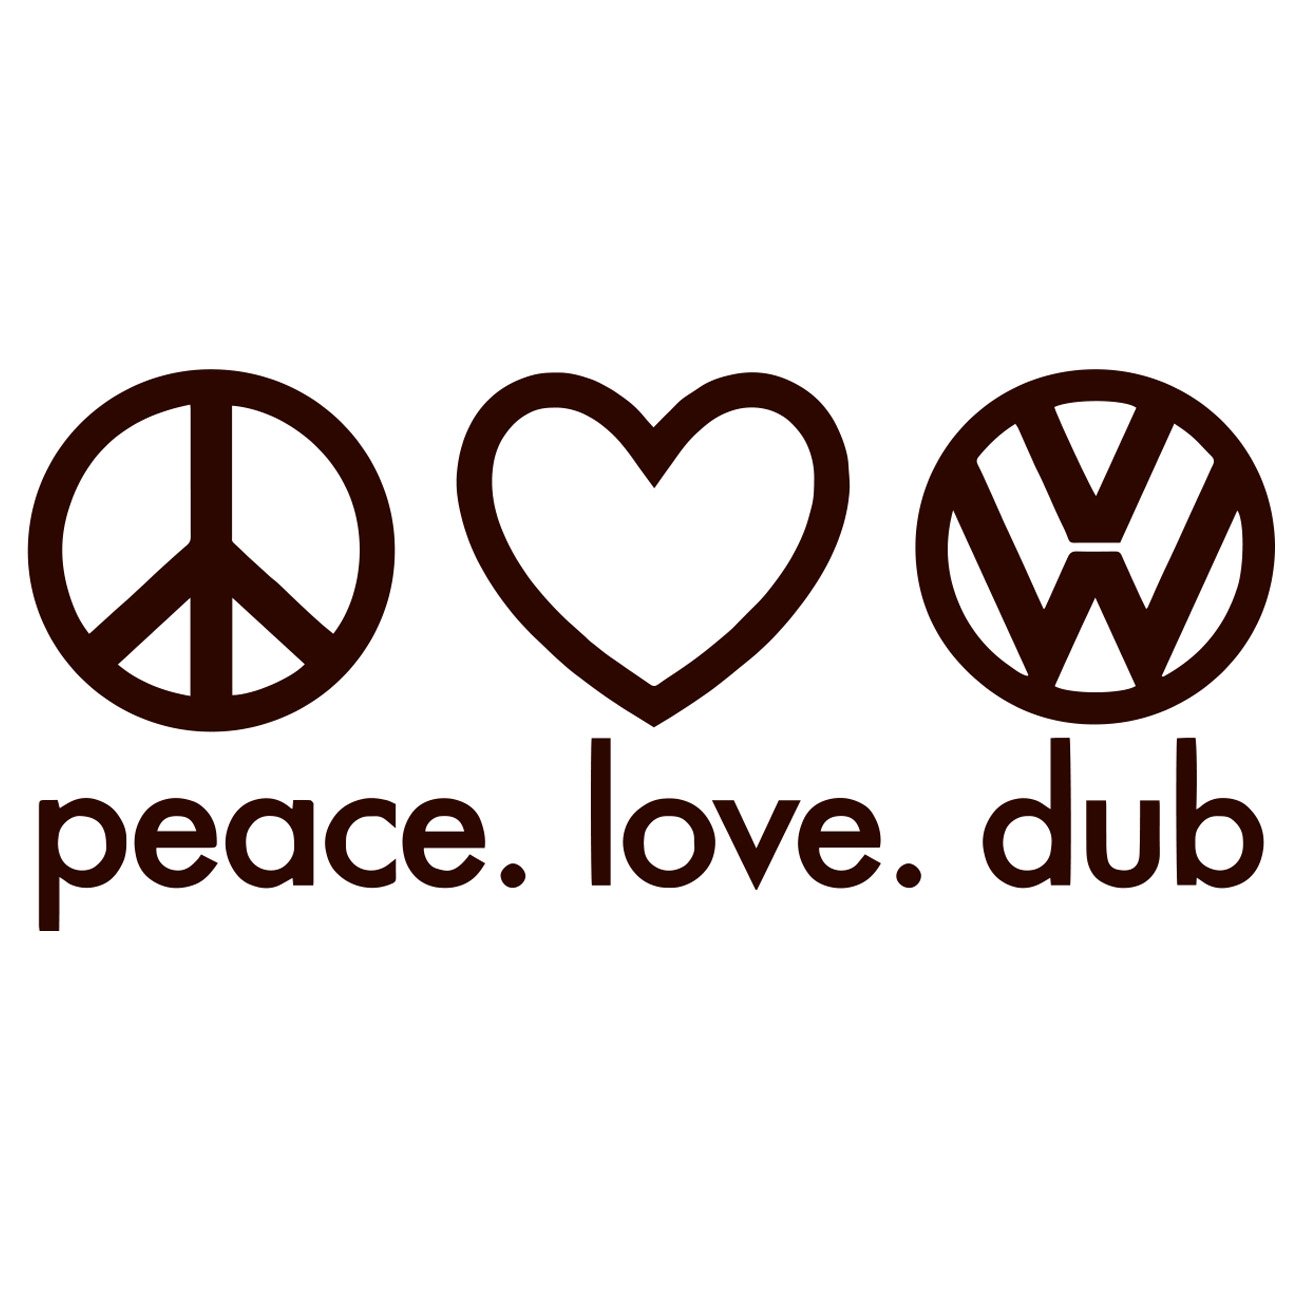 Peace love dub